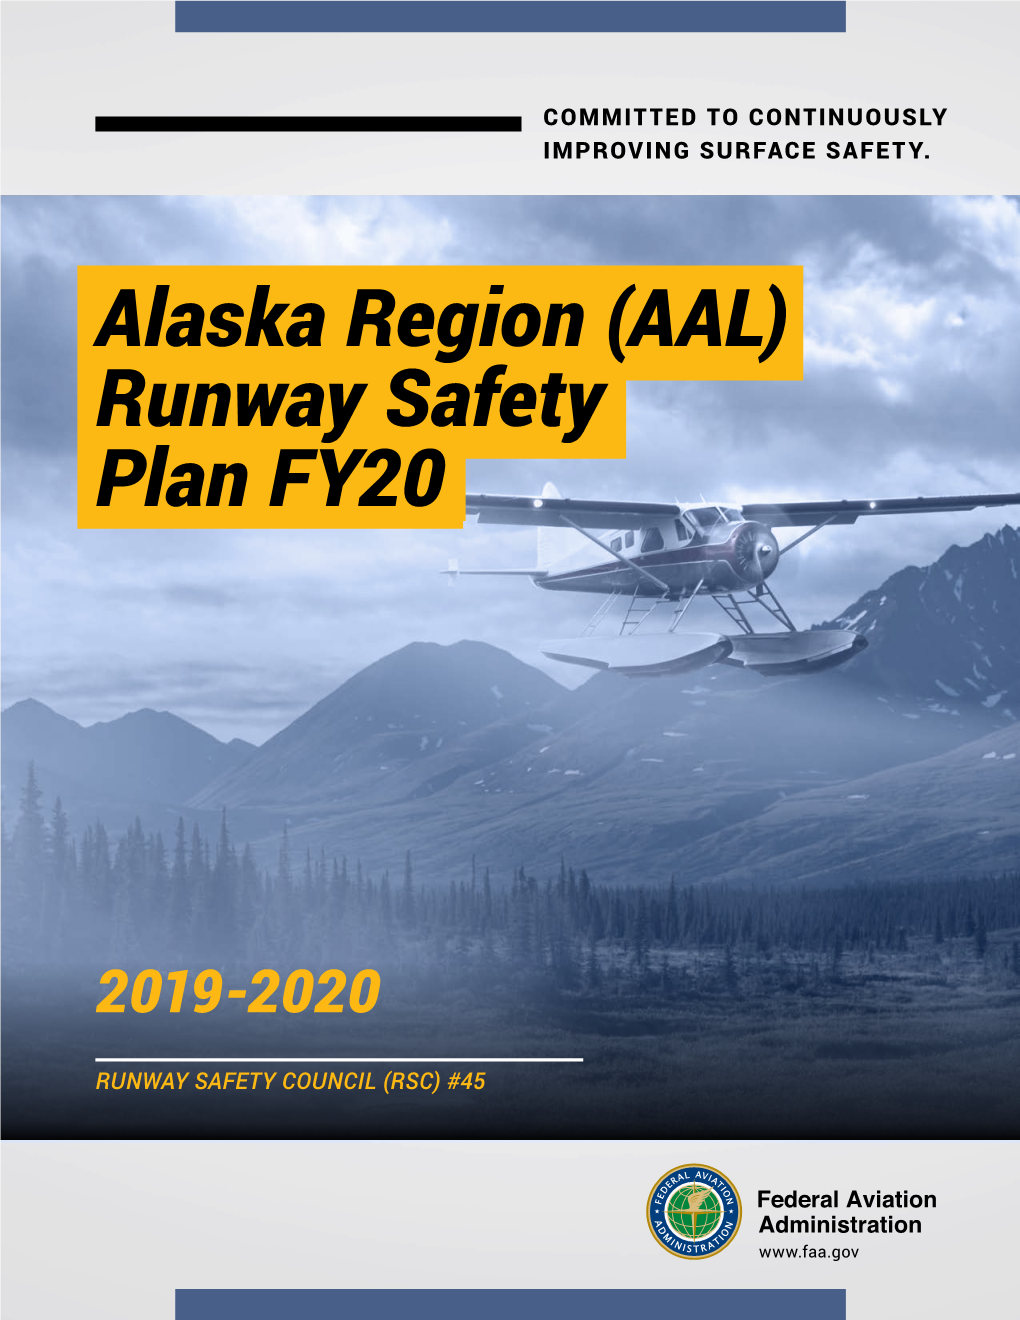 Alaska Region (AAL) Runway Safety Plan, FY 2020